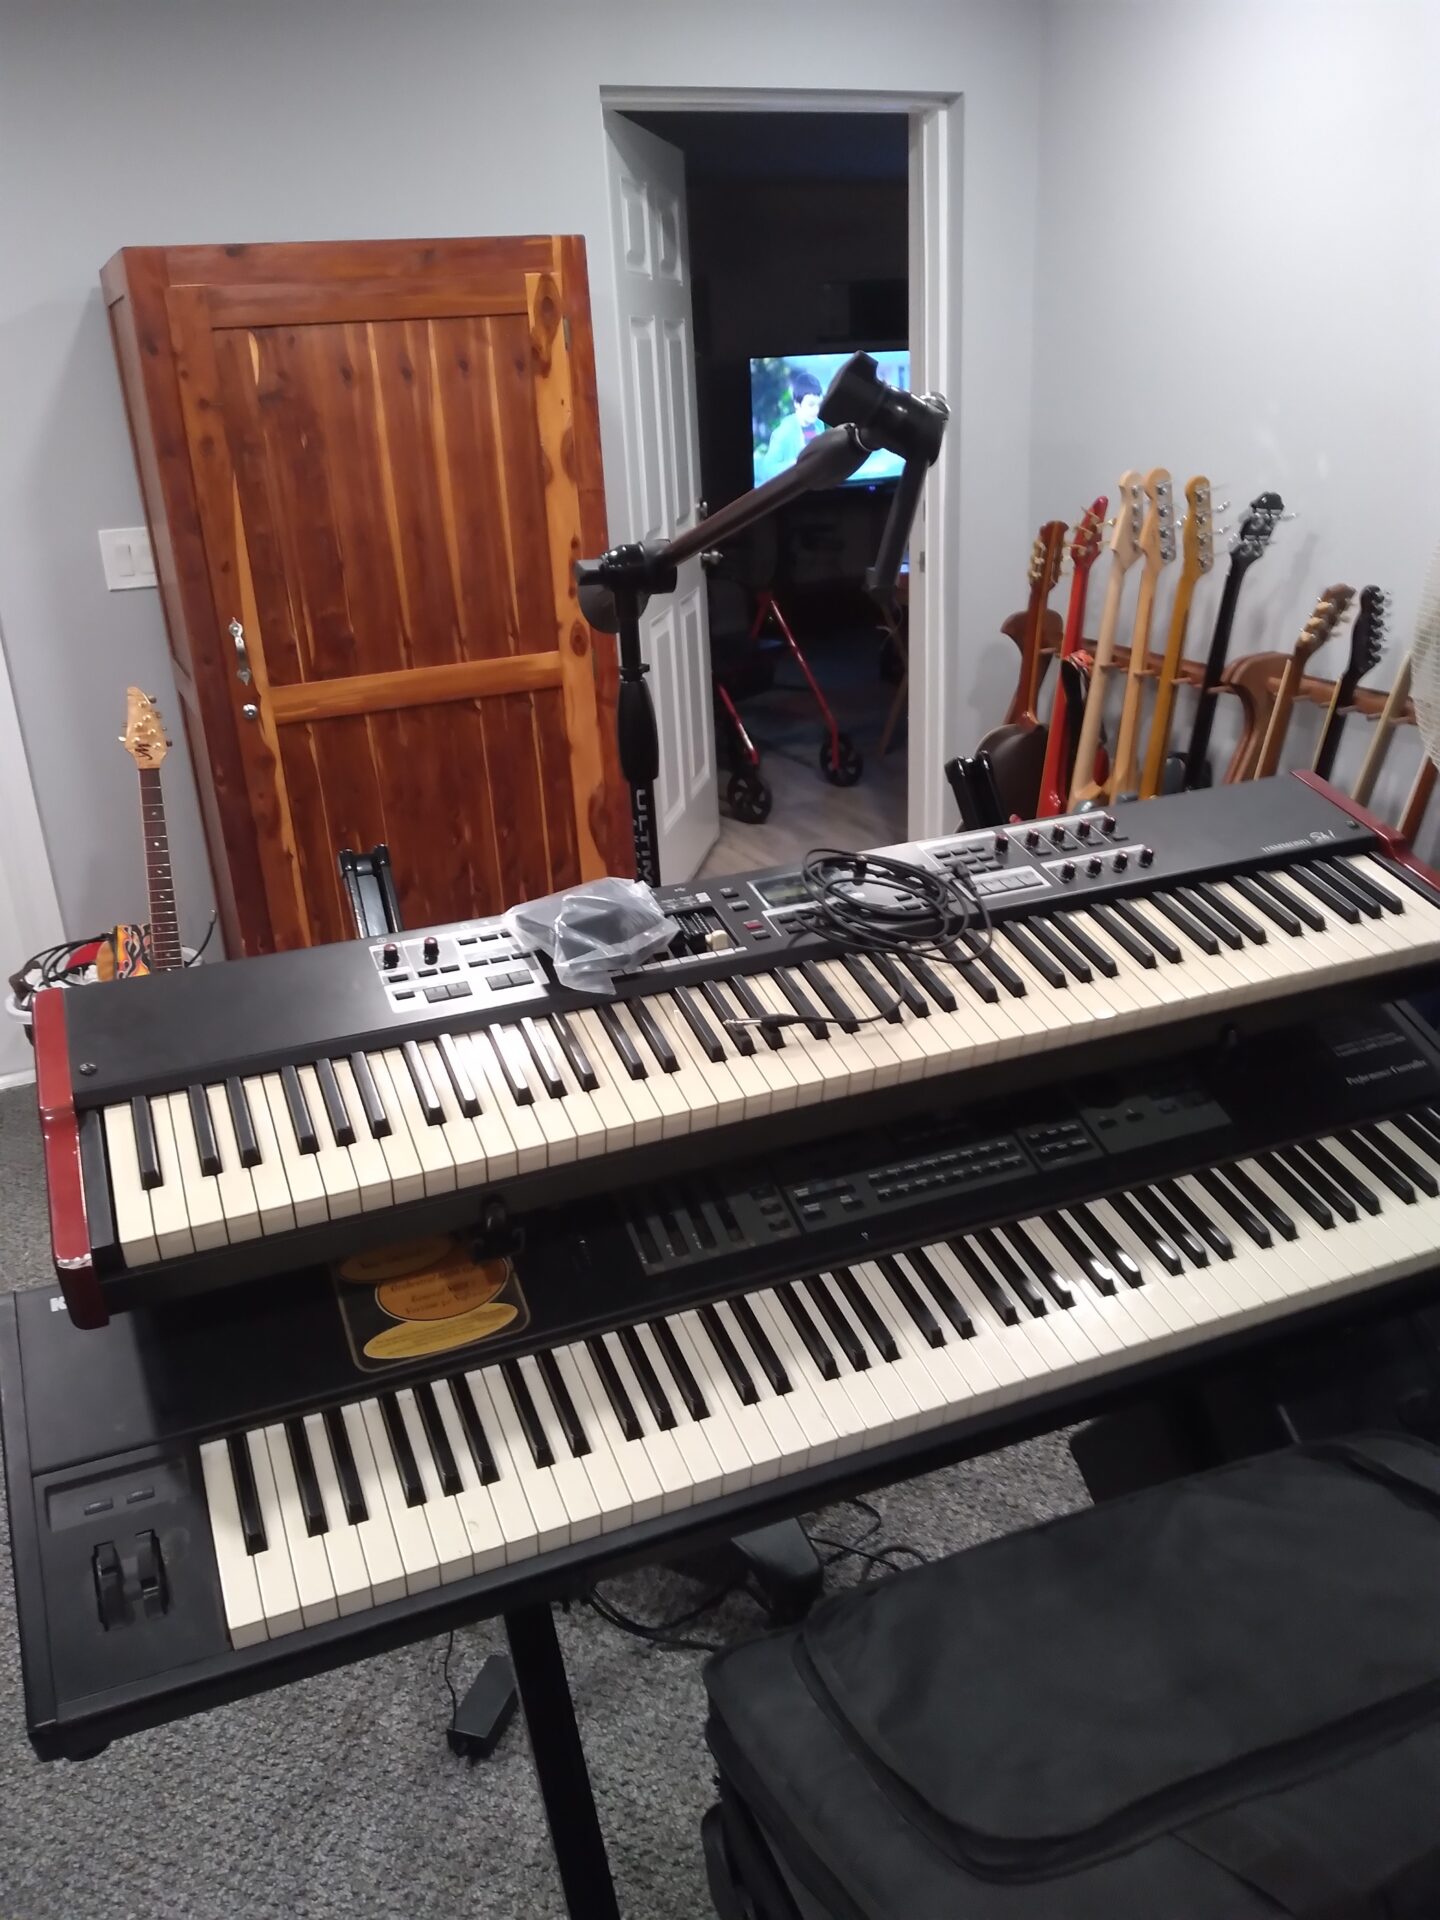 Keyboards, Guitars and Music Studio